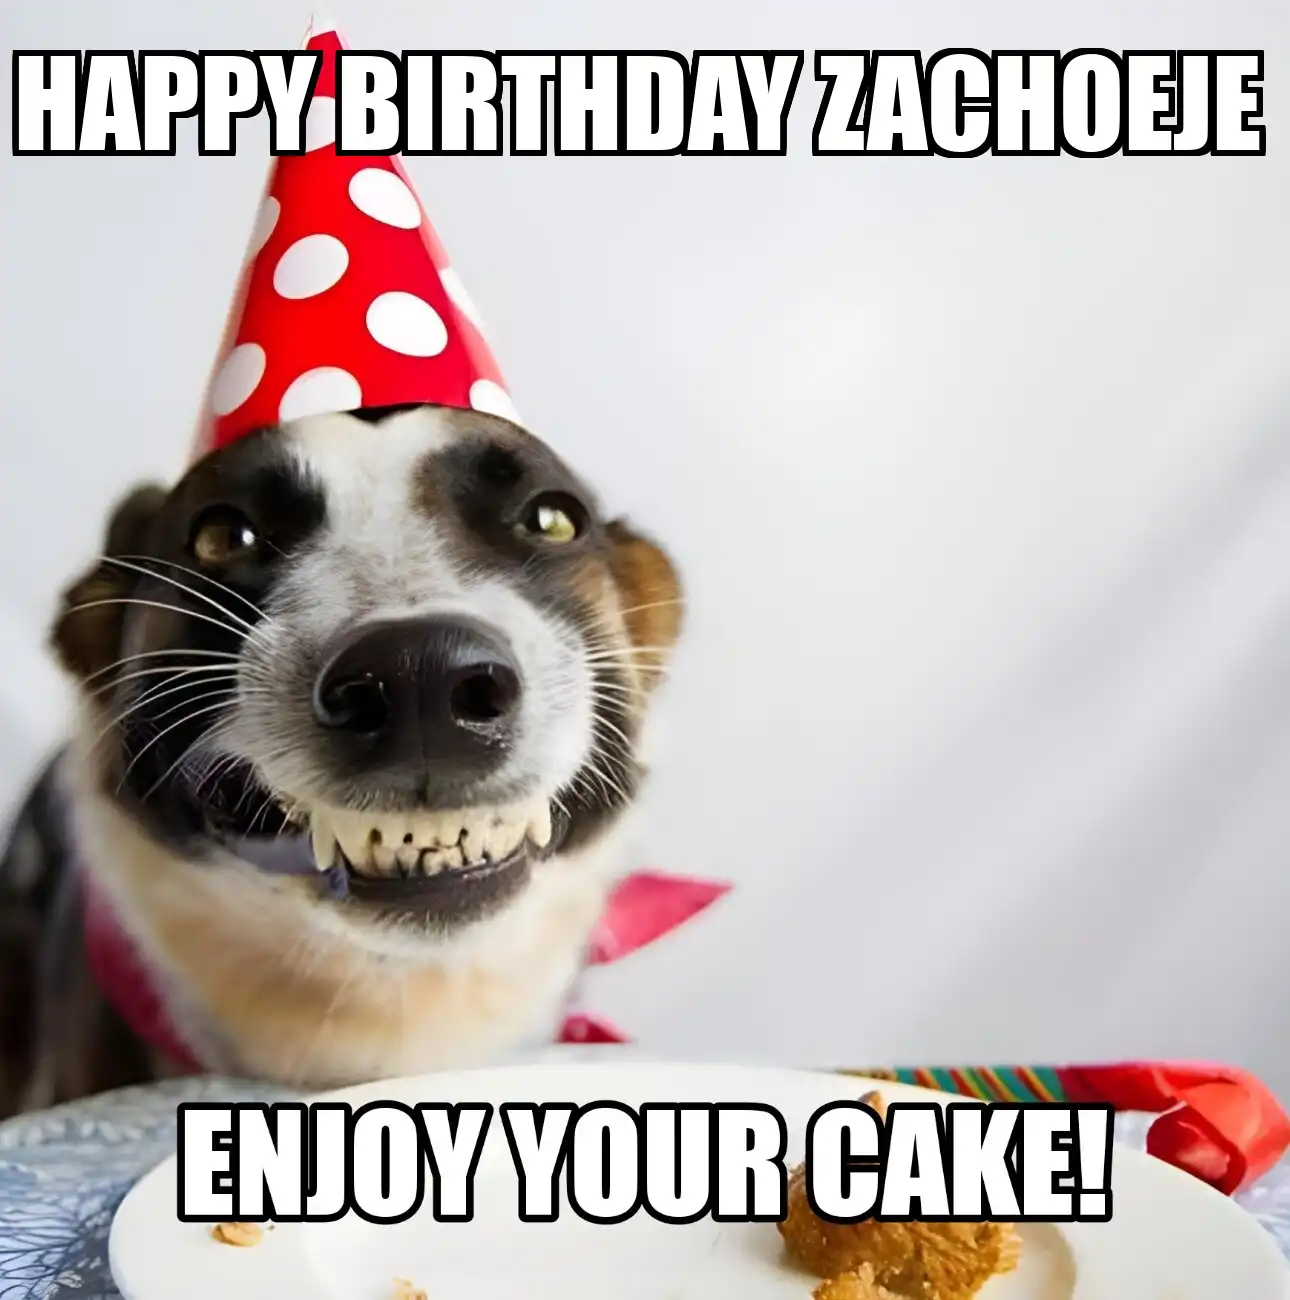 Happy Birthday Zachoeje Enjoy Your Cake Dog Meme